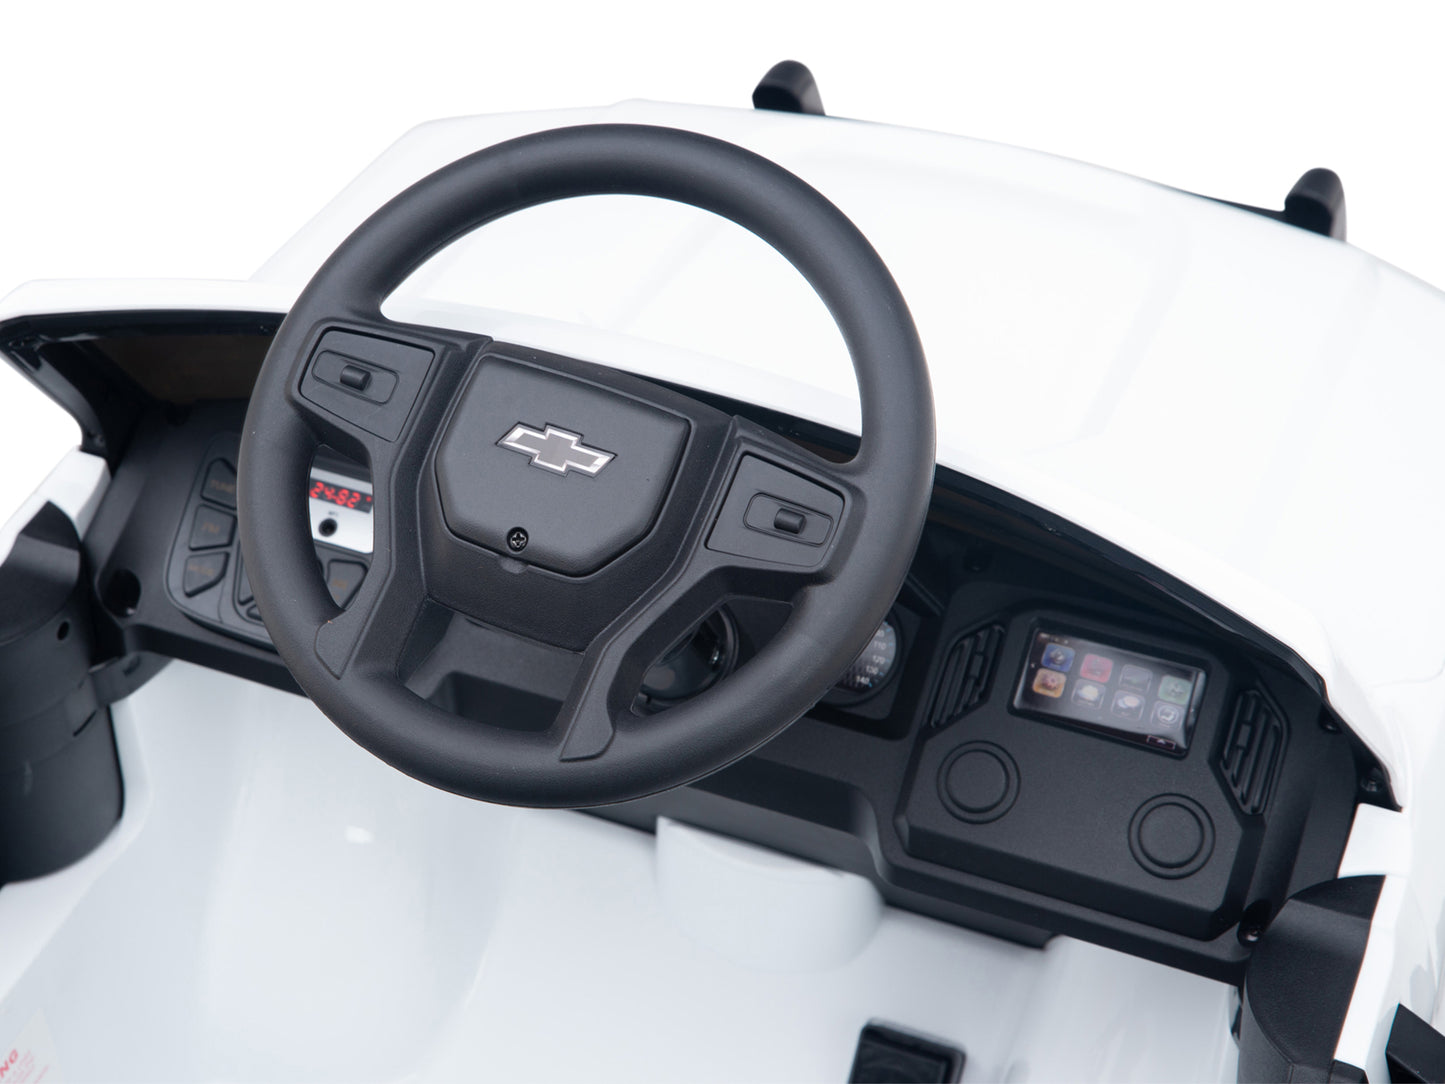 24V Chevrolet Silverado Lifted Ride On Truck with Remote Control – White